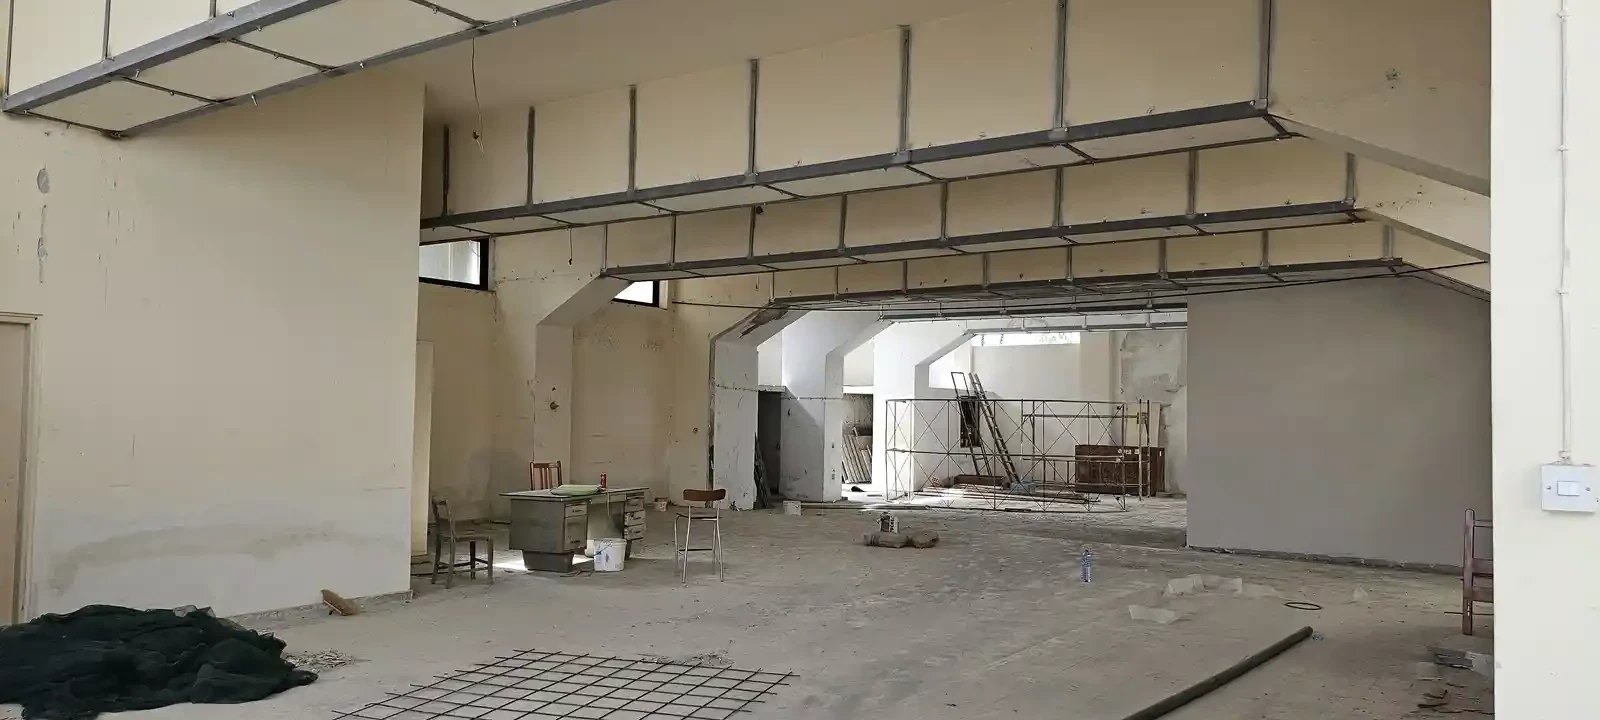 325 sq.m. showroom under renovation to rent €2.600, image 1